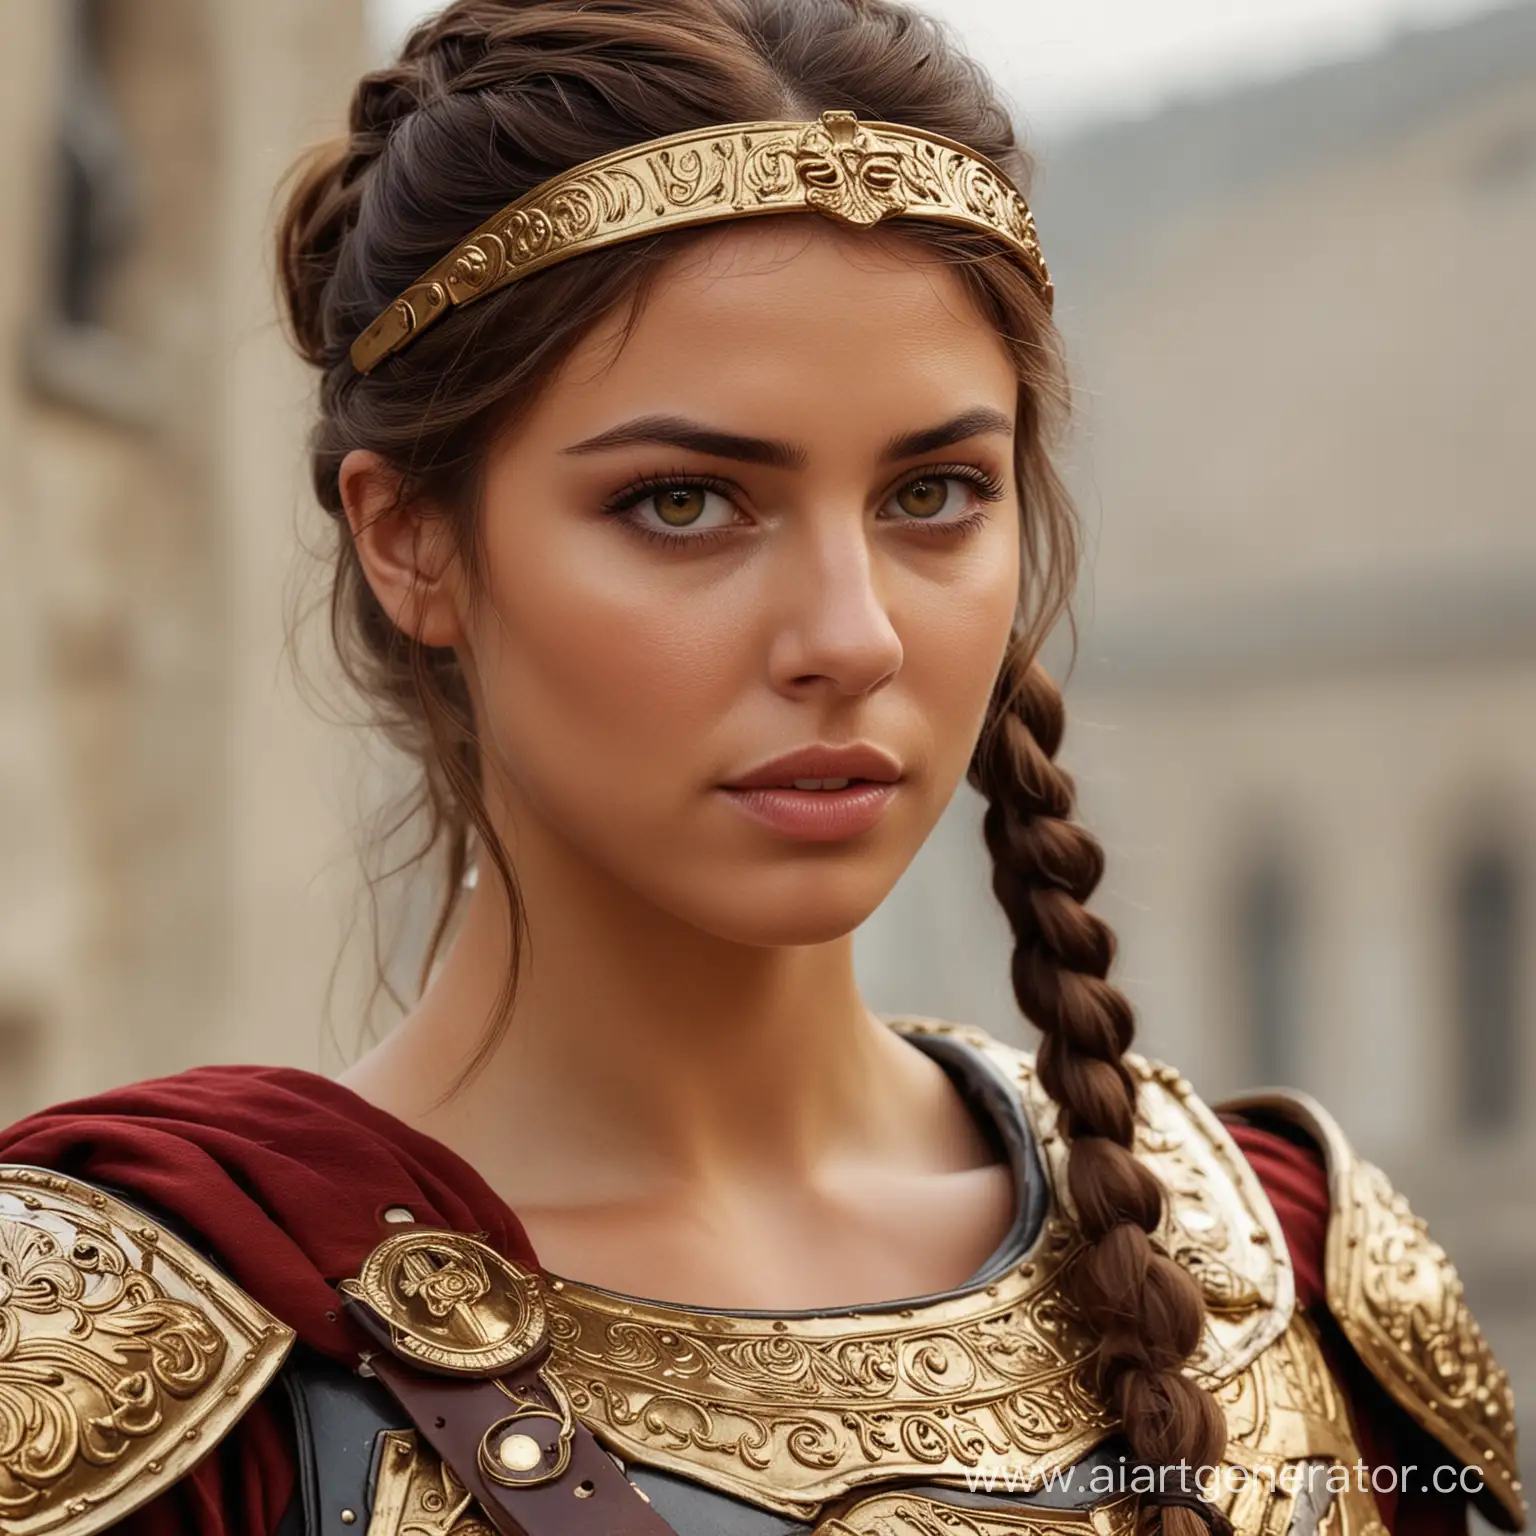 Roman-Legionnaire-Woman-with-Golden-Eyes-in-Stunning-Attire